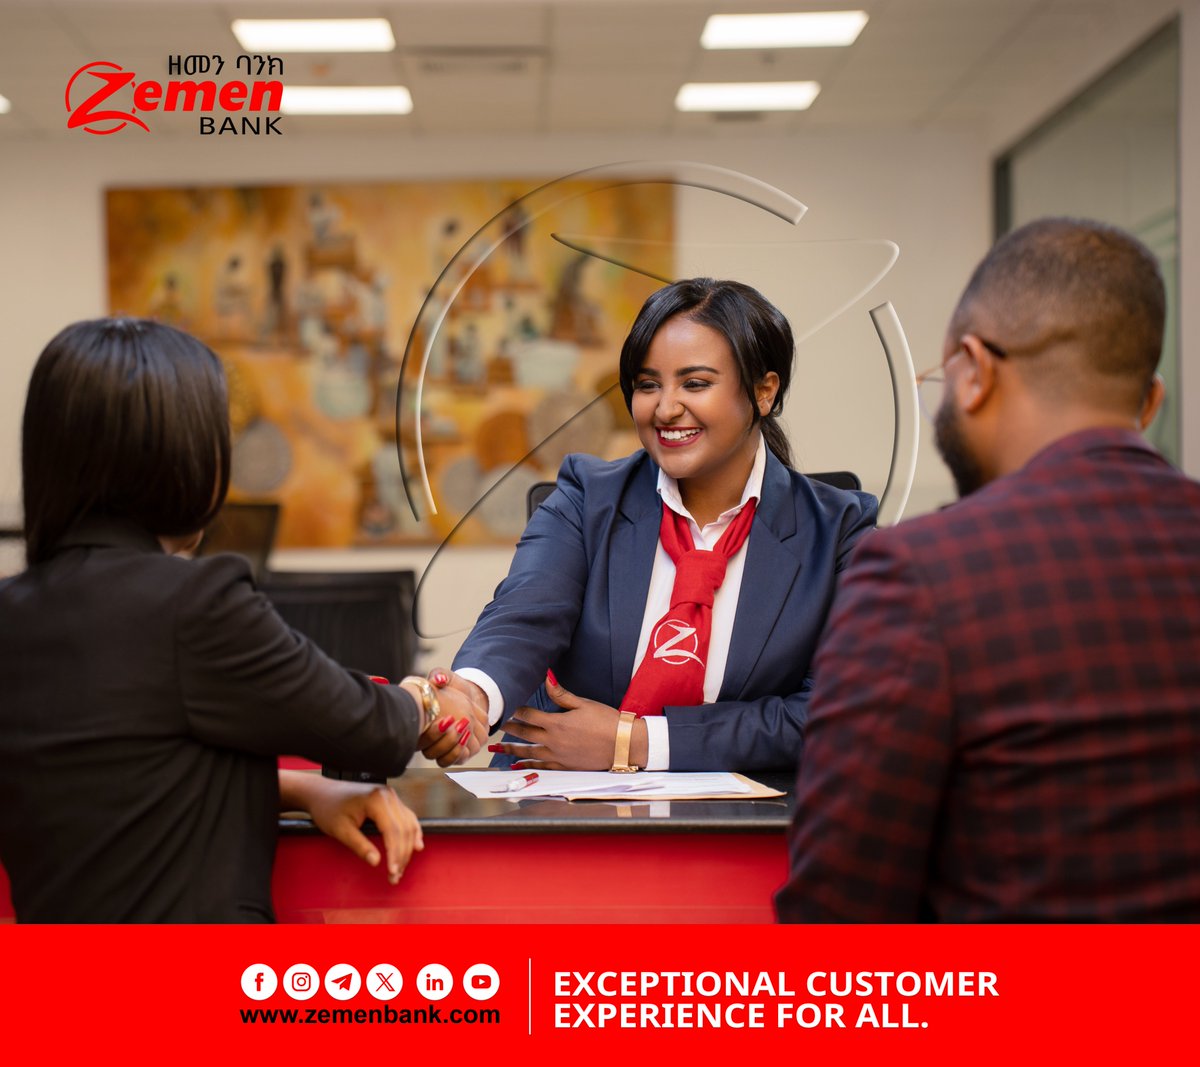 At Zemen Bank, we redefine banking as customer experience.
***
 #ዘመንባንክ #Customerexperience #ZemenBank #customerservice